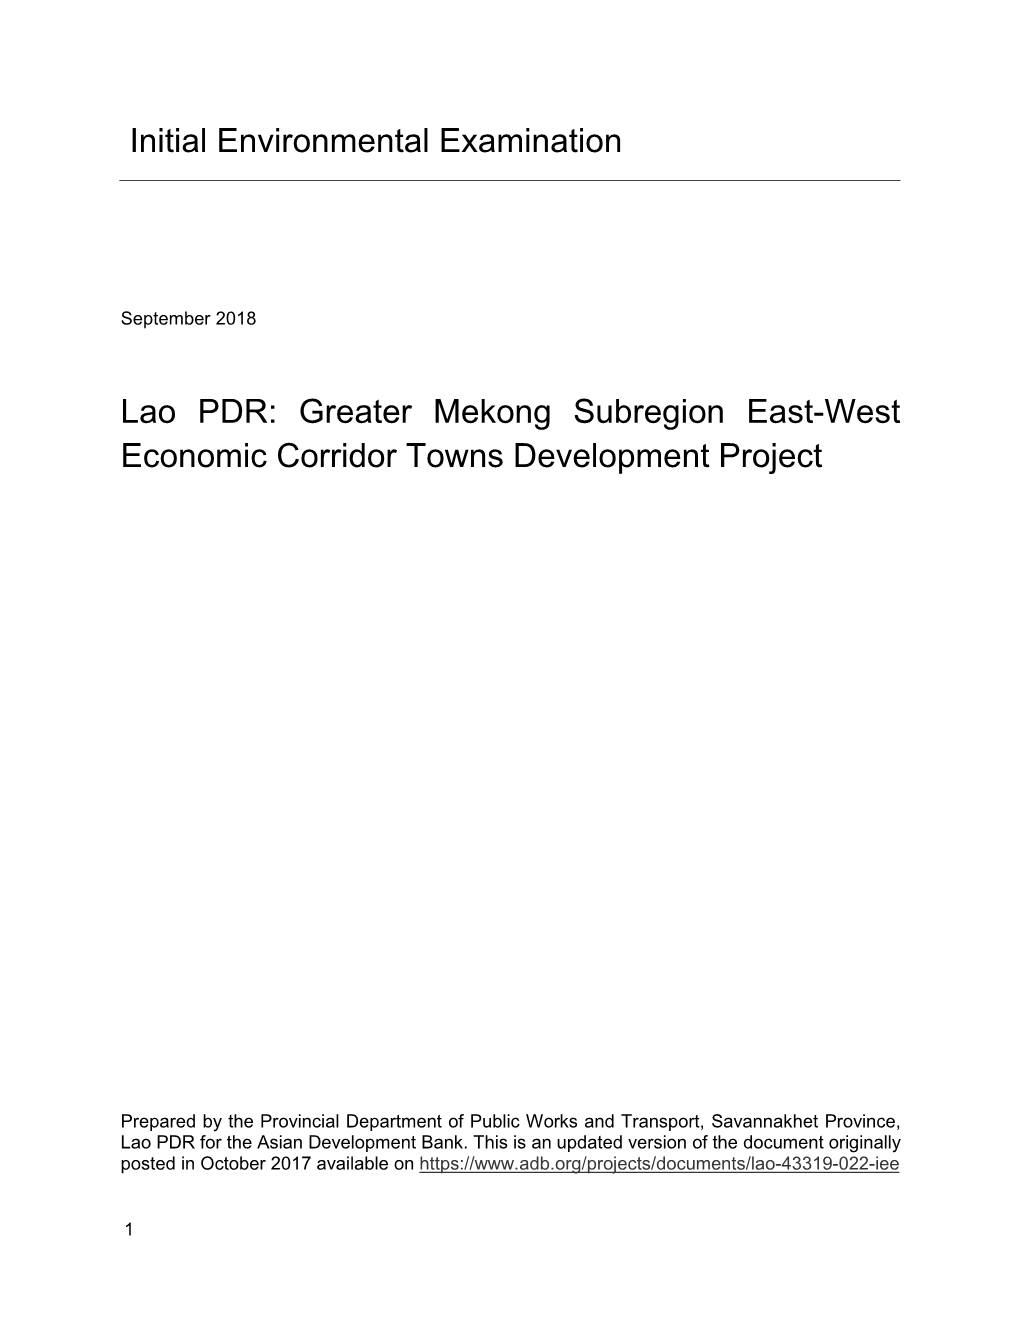 Greater Mekong Subregion East-West Economic Corridor Towns Development Project ADB's Loan No.2931-(SF), G 0313- (SF)-0314 (UEIF)-LAO